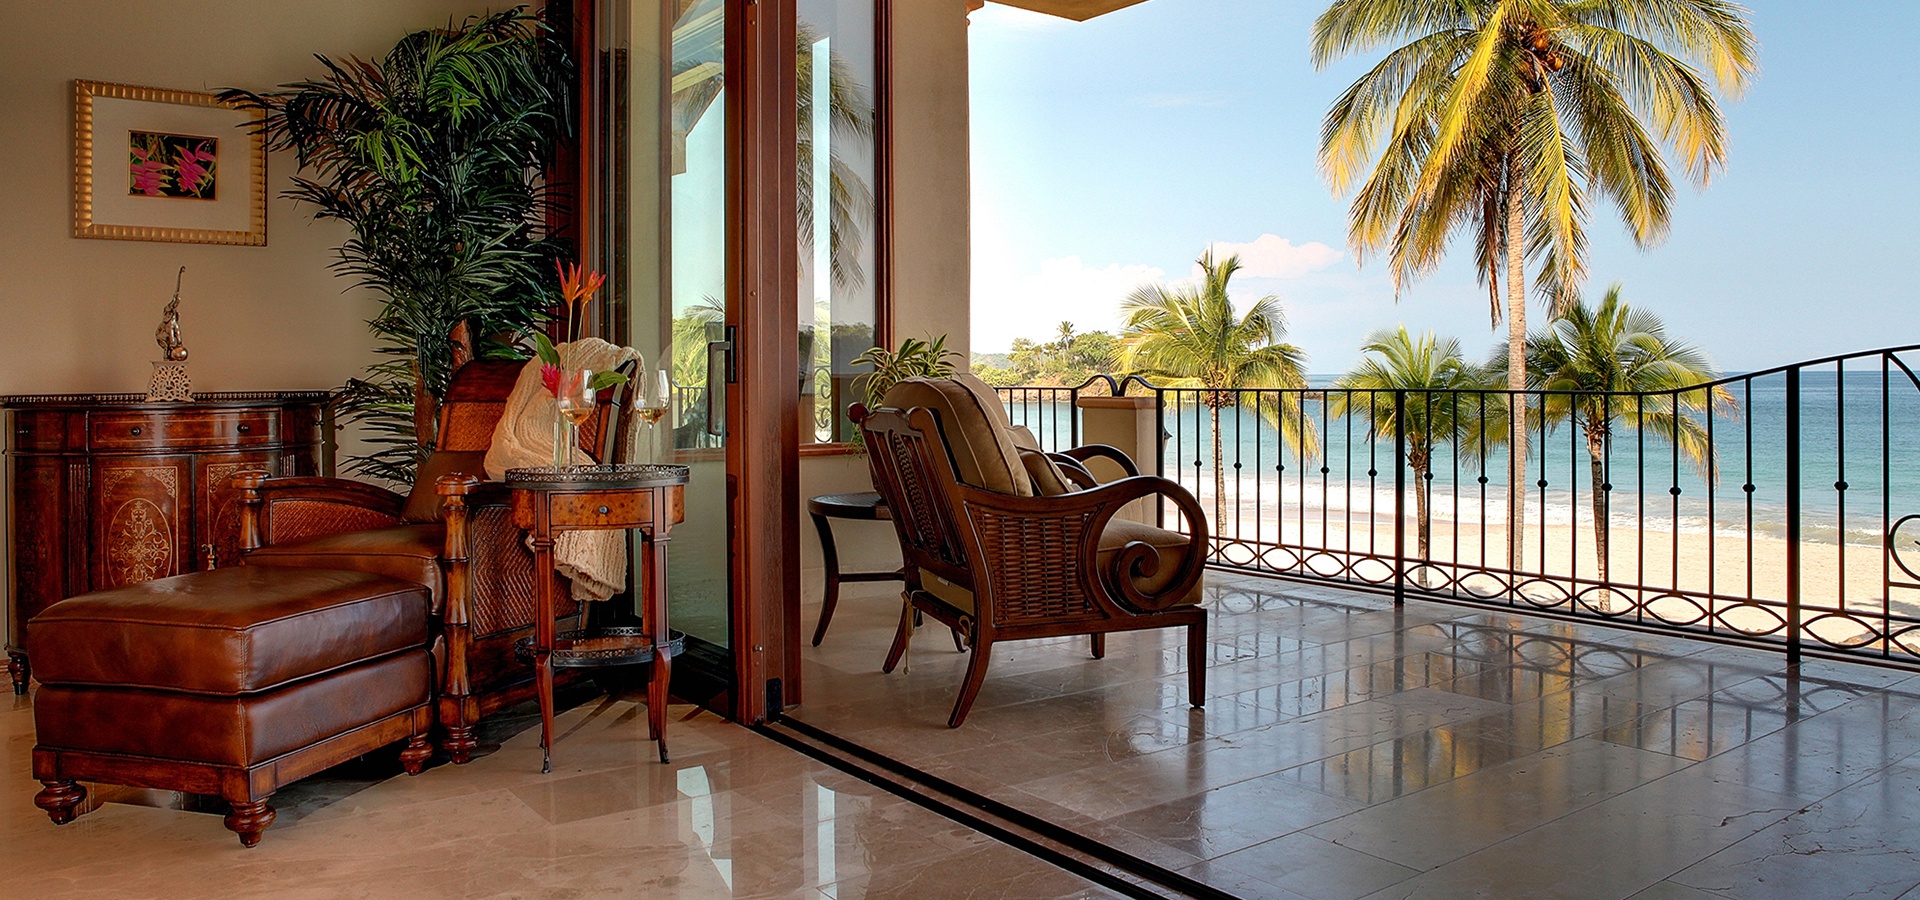 Palms Villas Costa Rica outside your door, native stone walkways winding through stunning tropical landscape, 3 Bedroom Villa